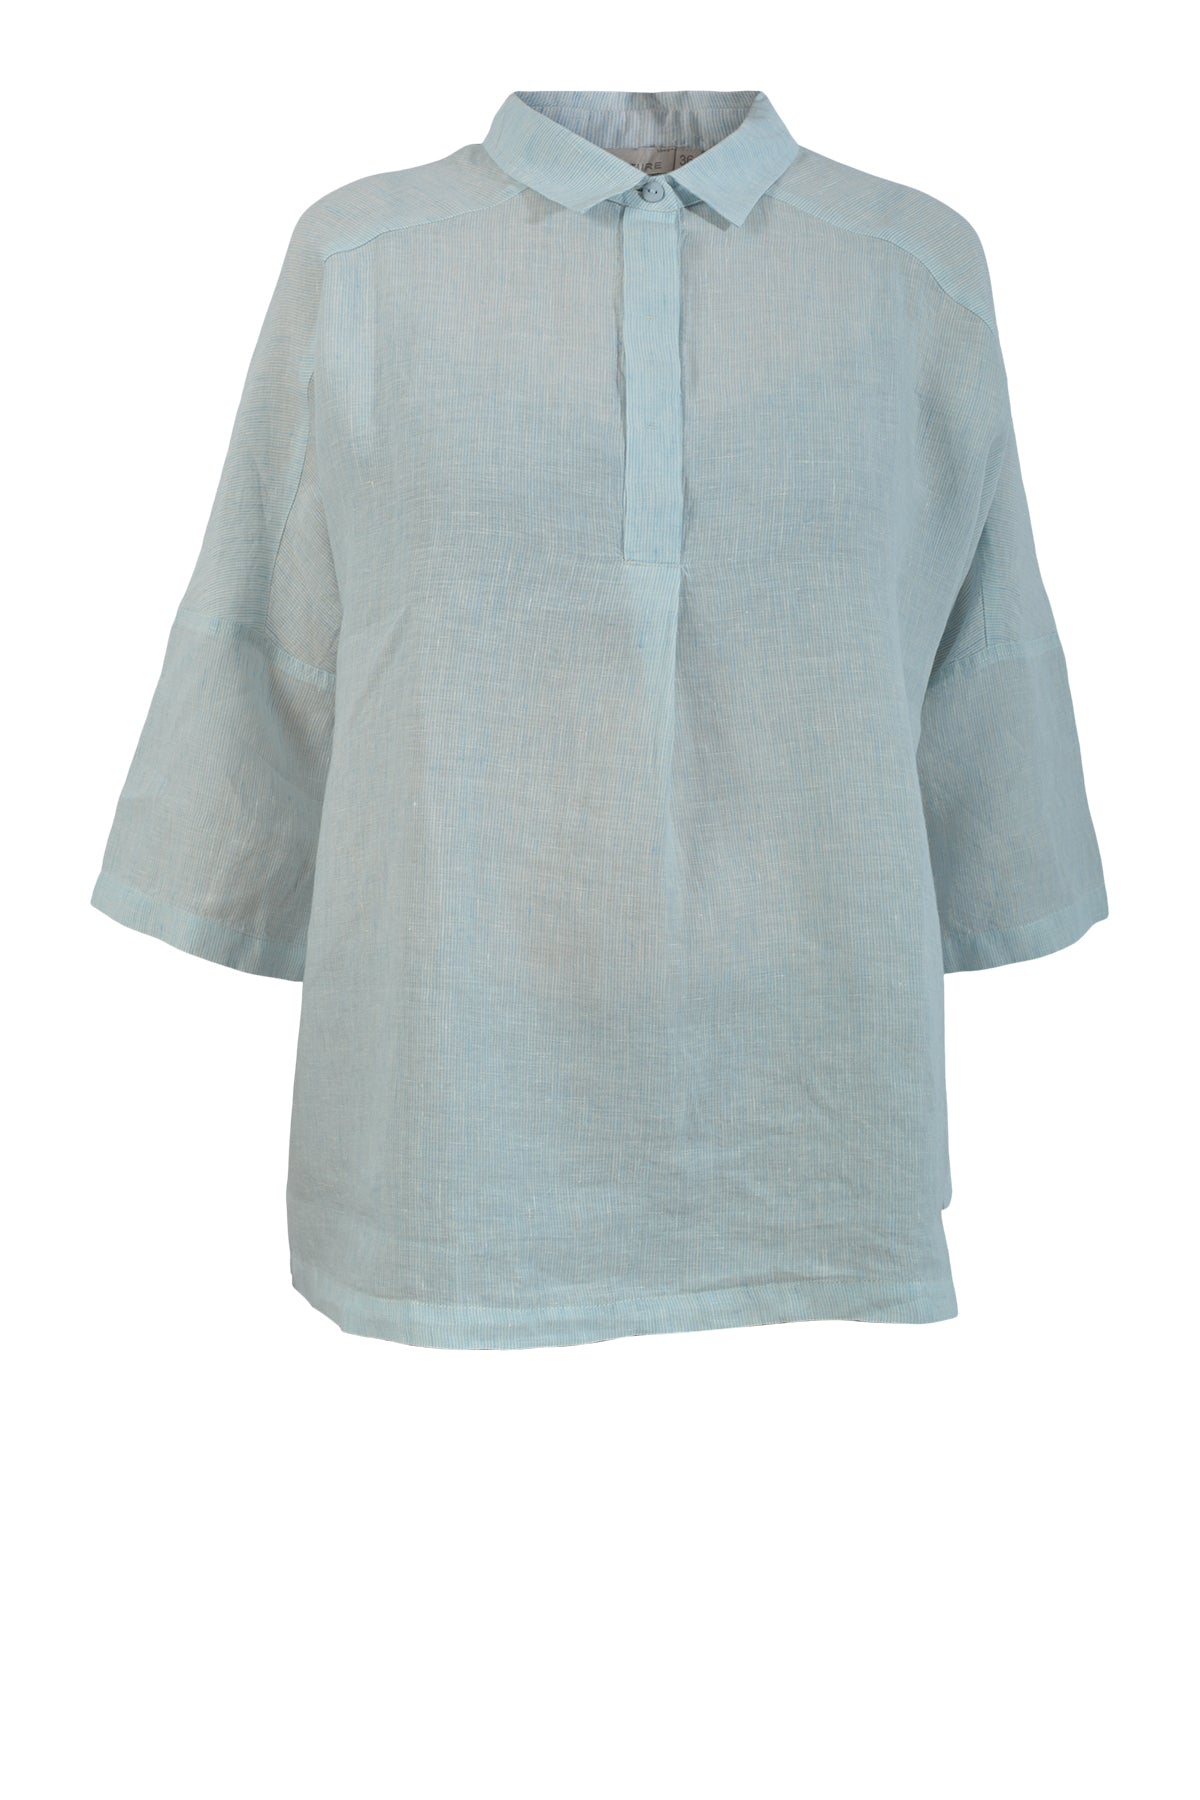 GR Nature skjortebluse TIZA-4, Offwhite/blue